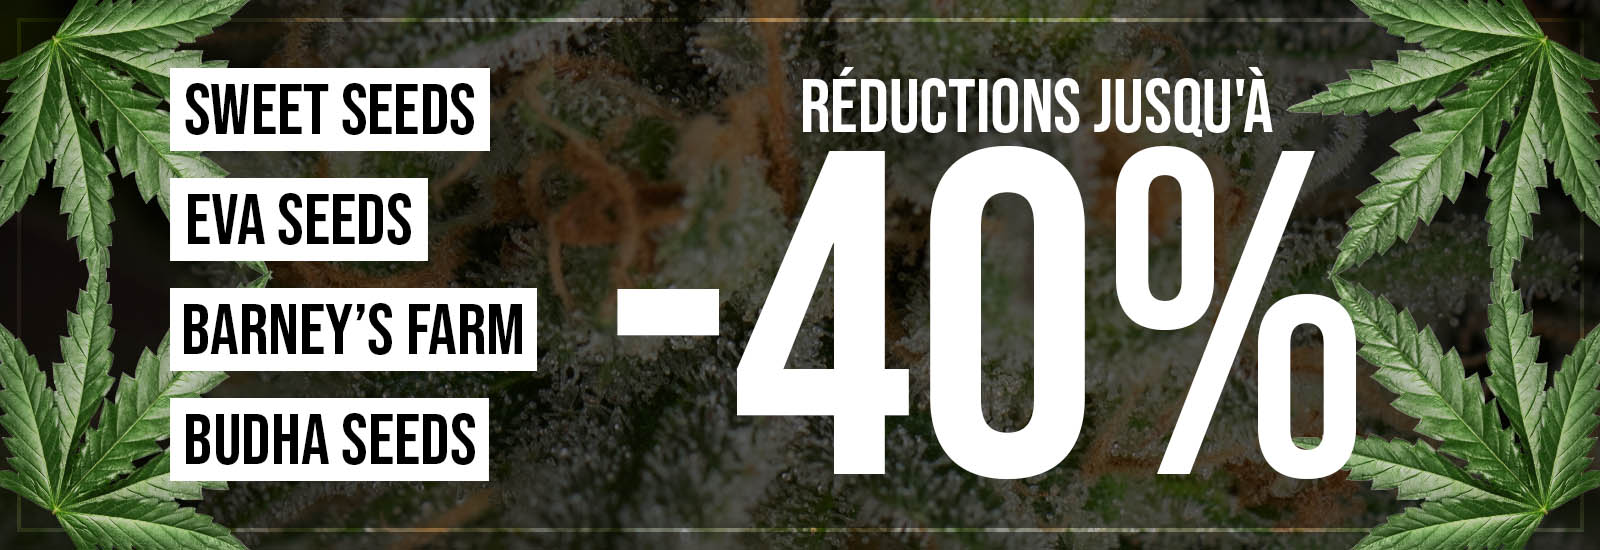 Reduction cannabis